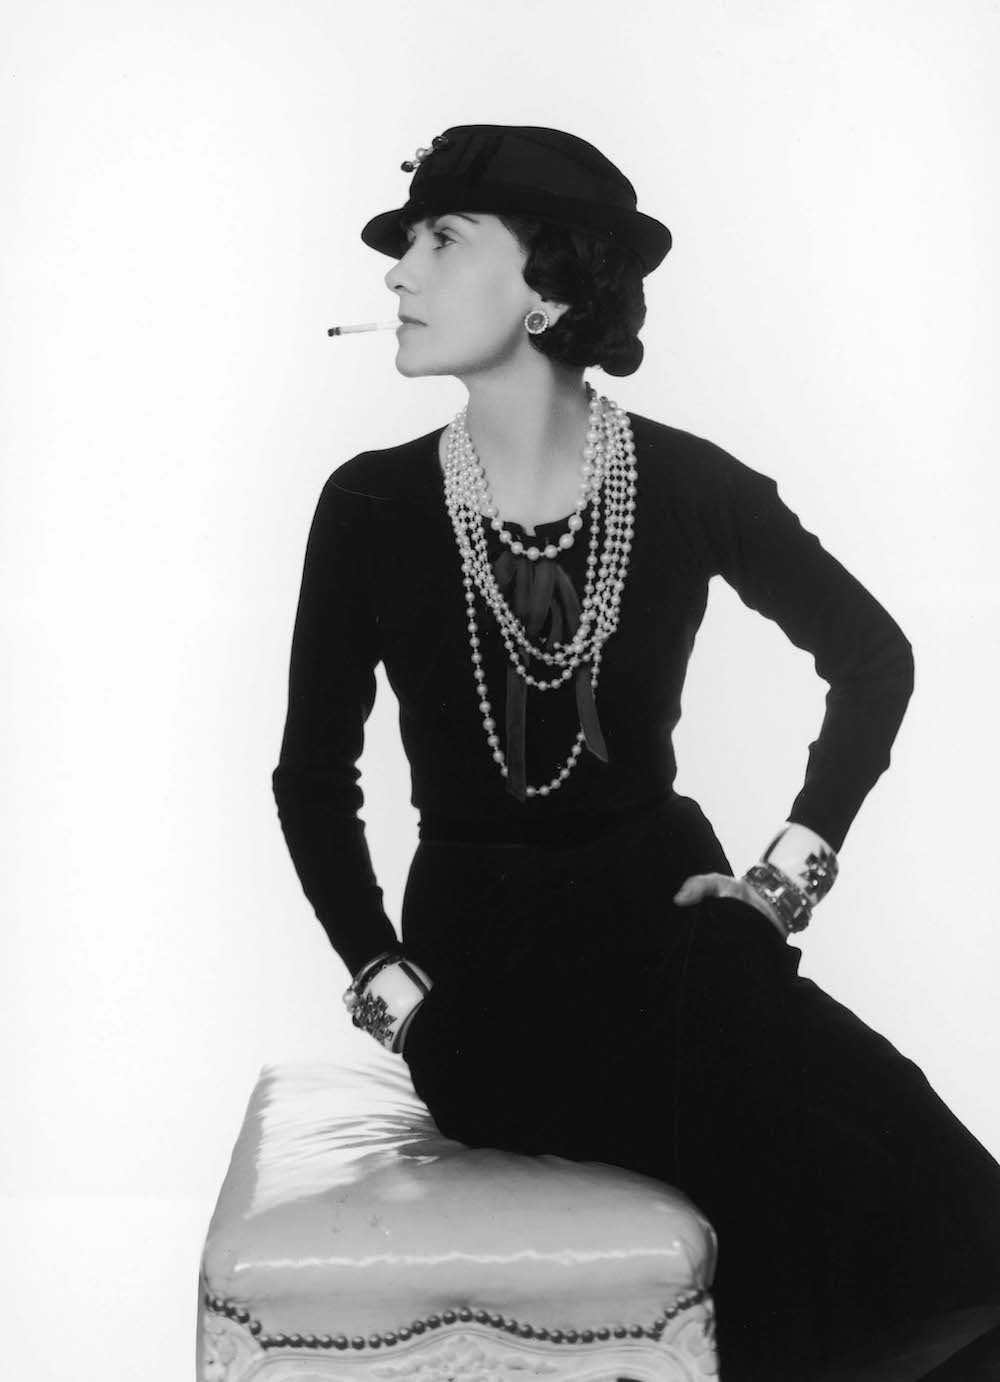 Nhà thiết kế Coco Chanel (1883-1971).